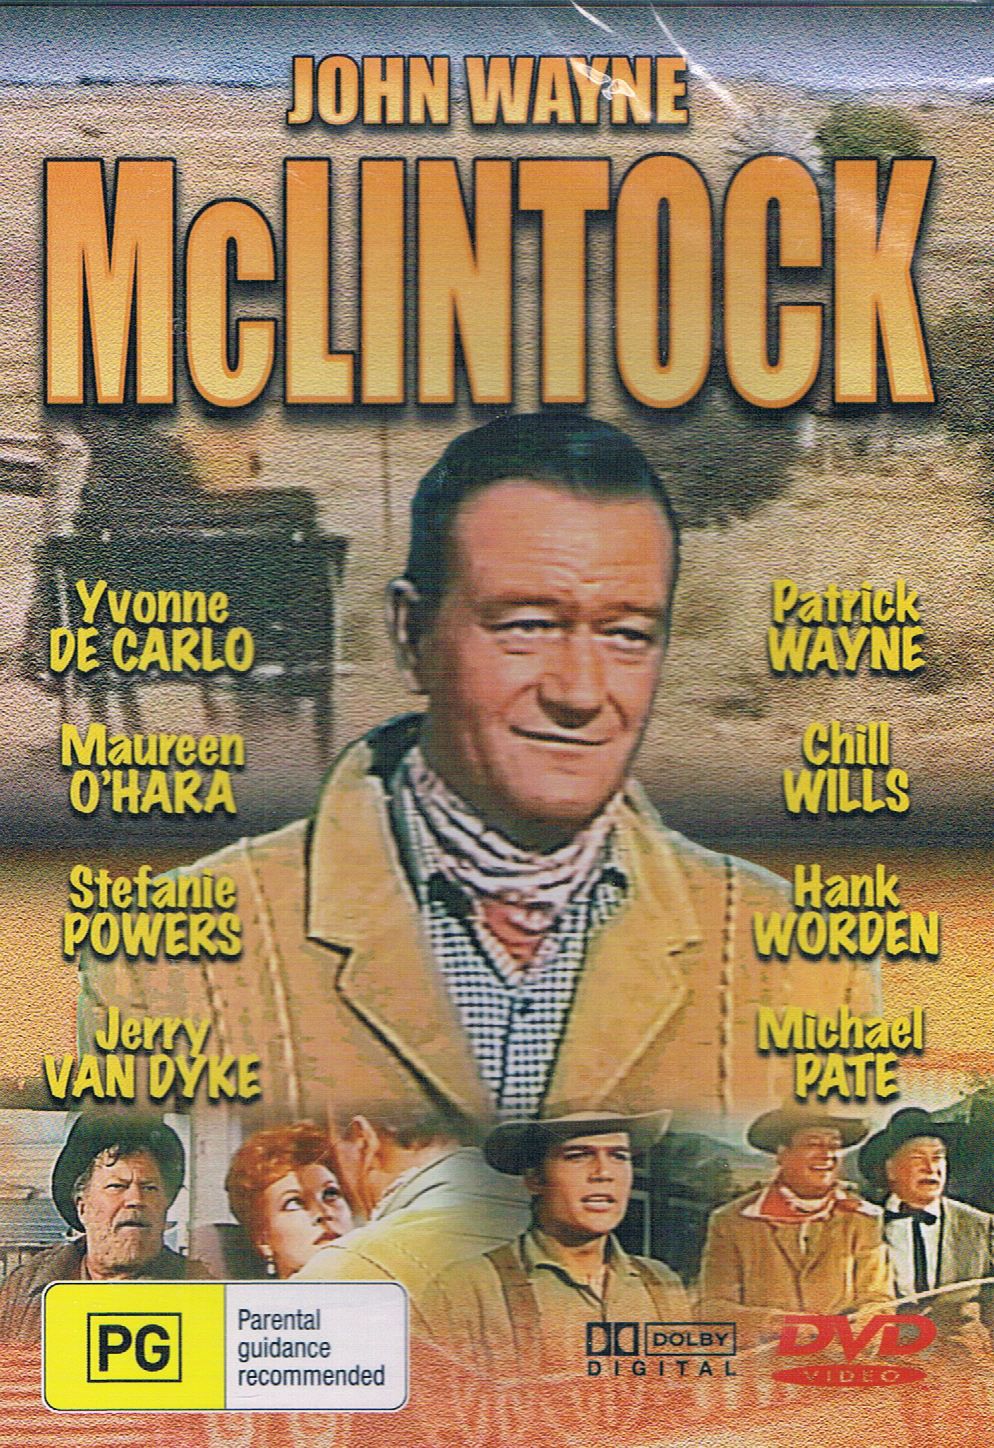 McLintock V2 DVD - John Wayne